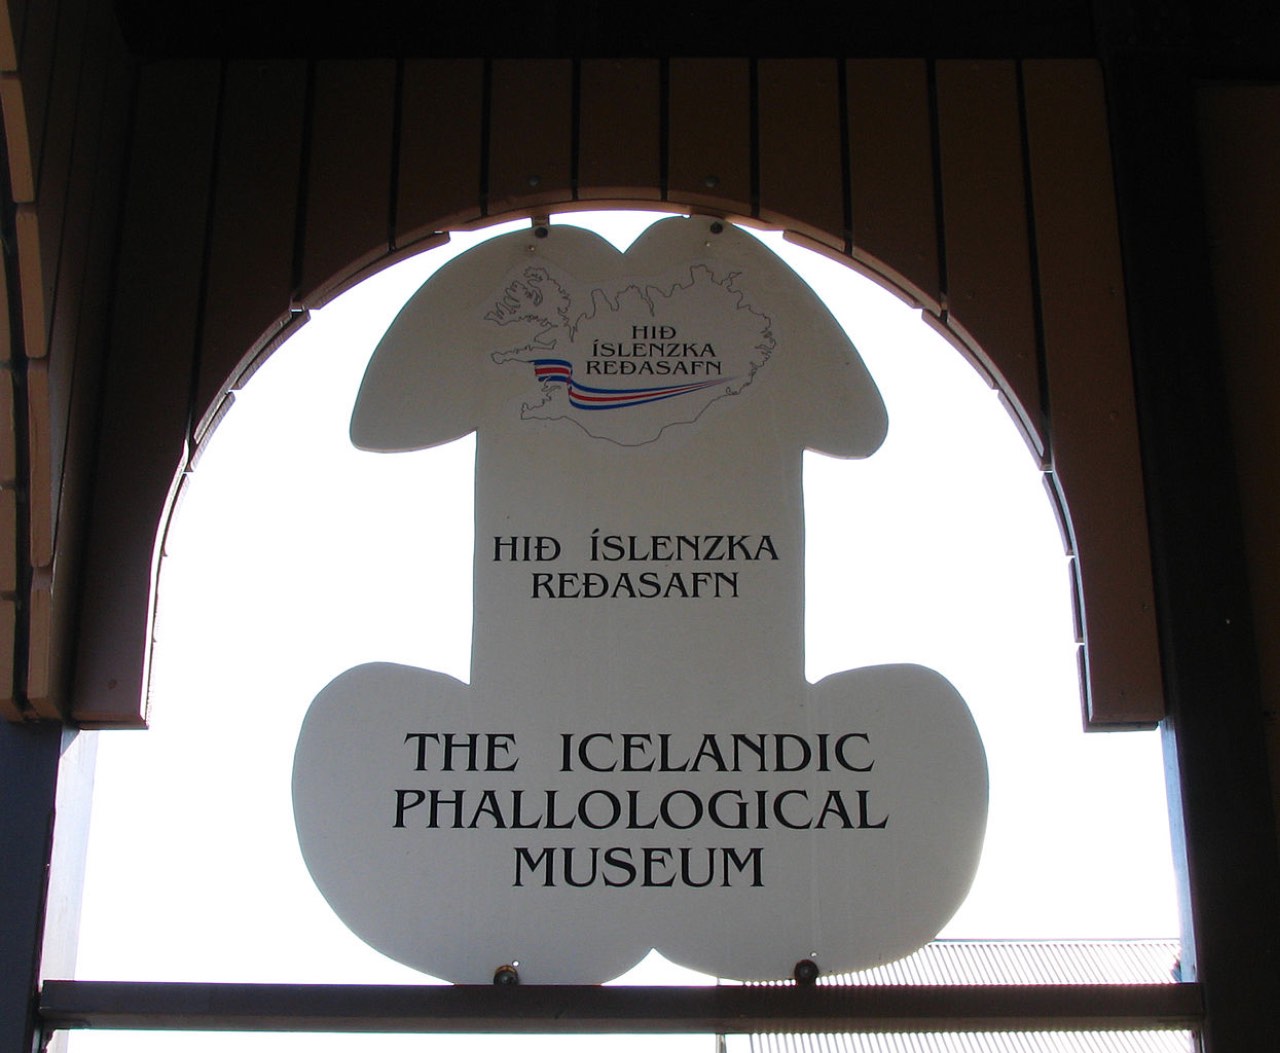 Museo Falologico de Islandia